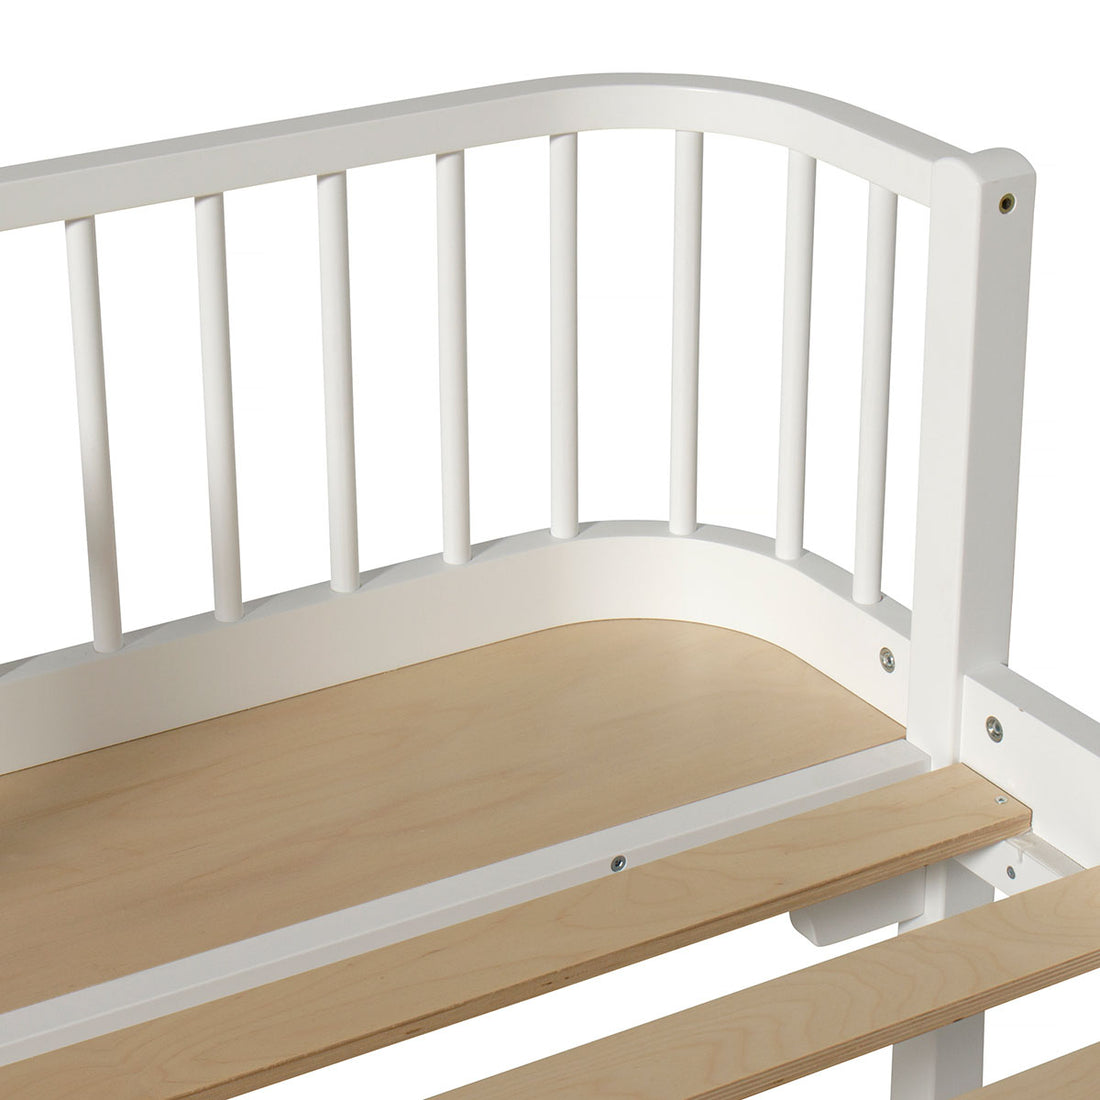 oliver-furniture-wood-bed-white- (4)